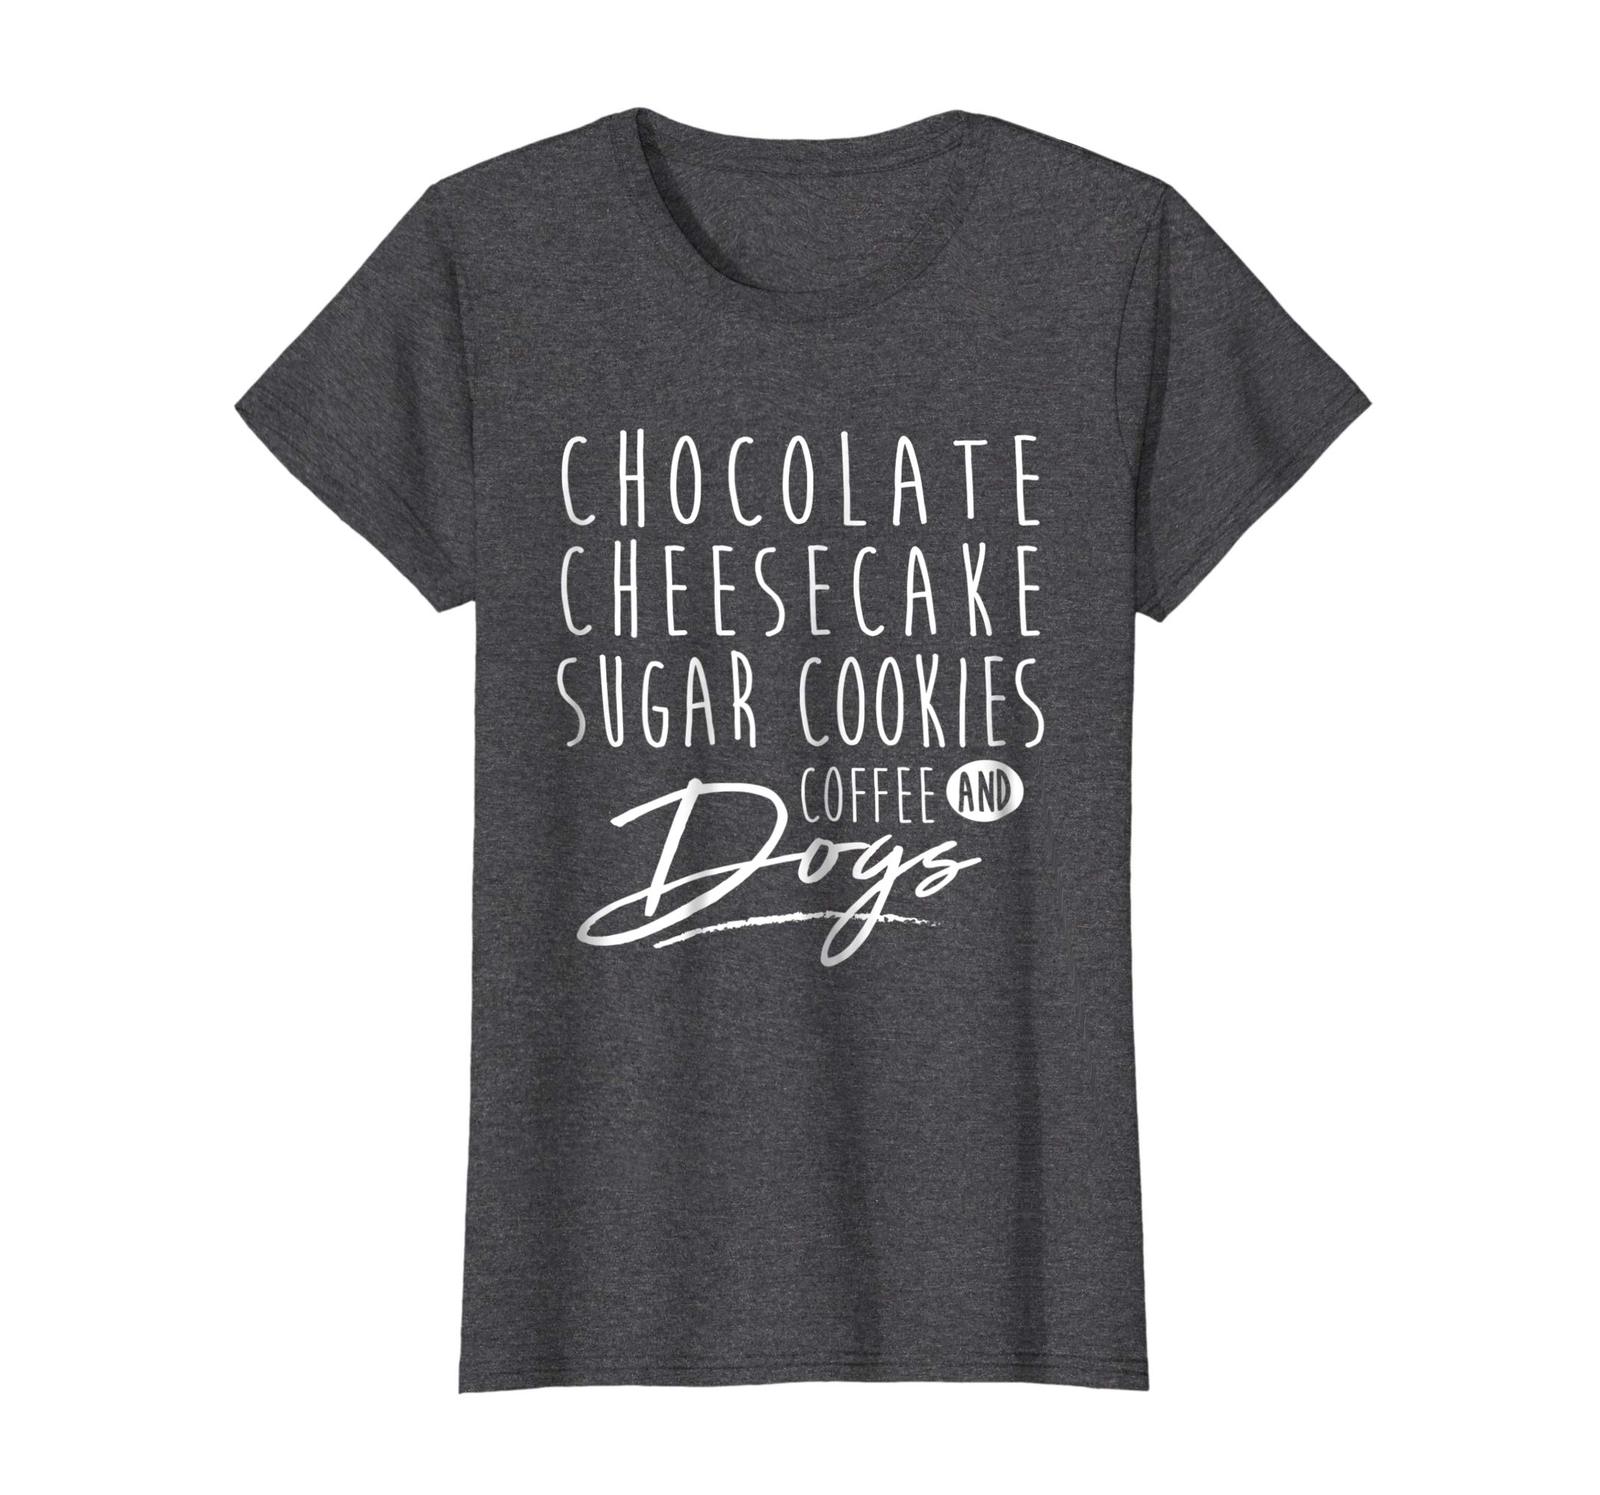 Dog Fashion - Chocolate Cheesecake Sugar Cookies Coffee & Dogs Tshirt Wowen